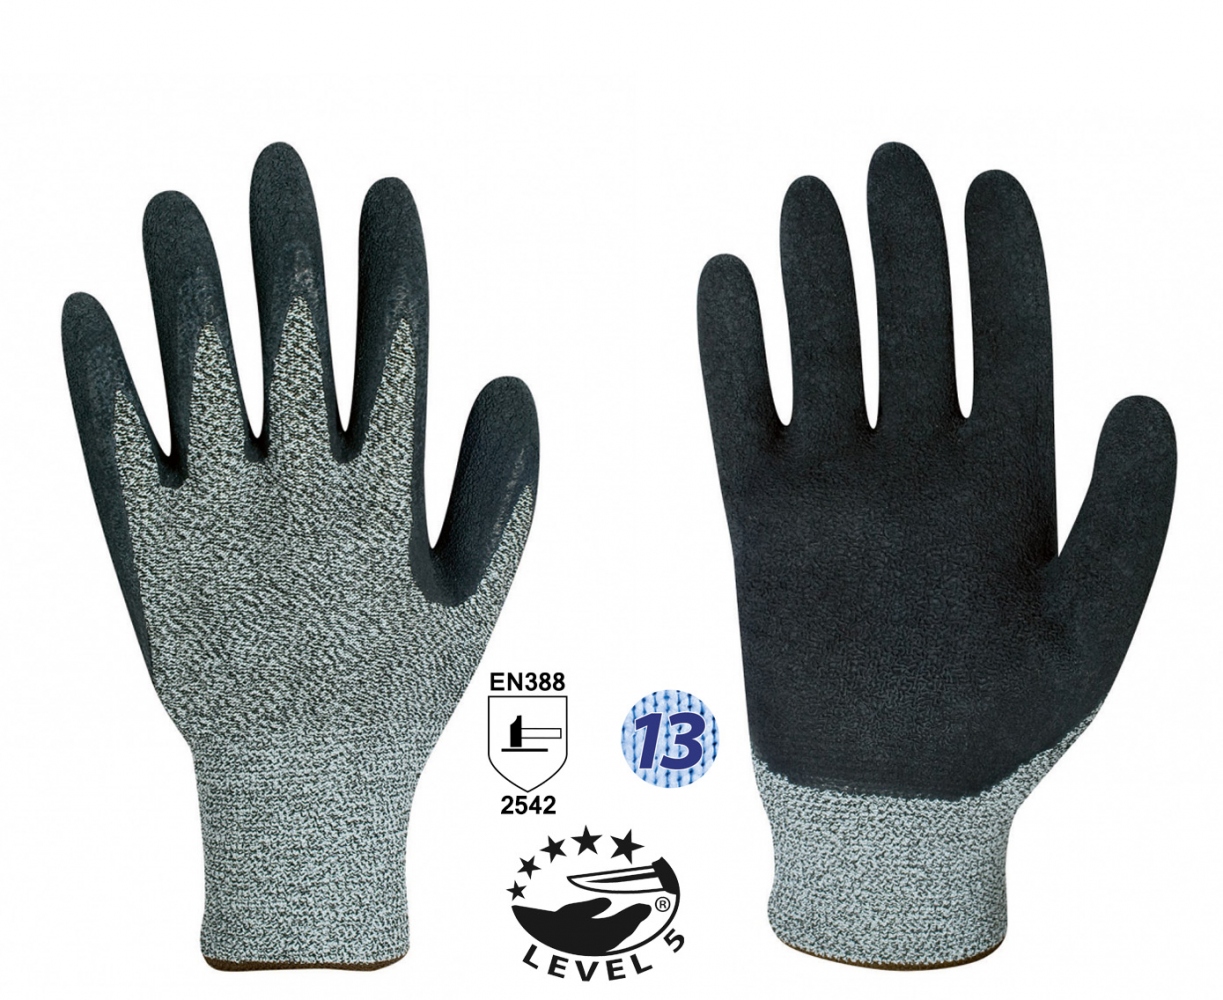 pics/Feldtmann 2016/Handschutz/stronghand-0830-dayton-cut-resistant-safety-gloves.jpg